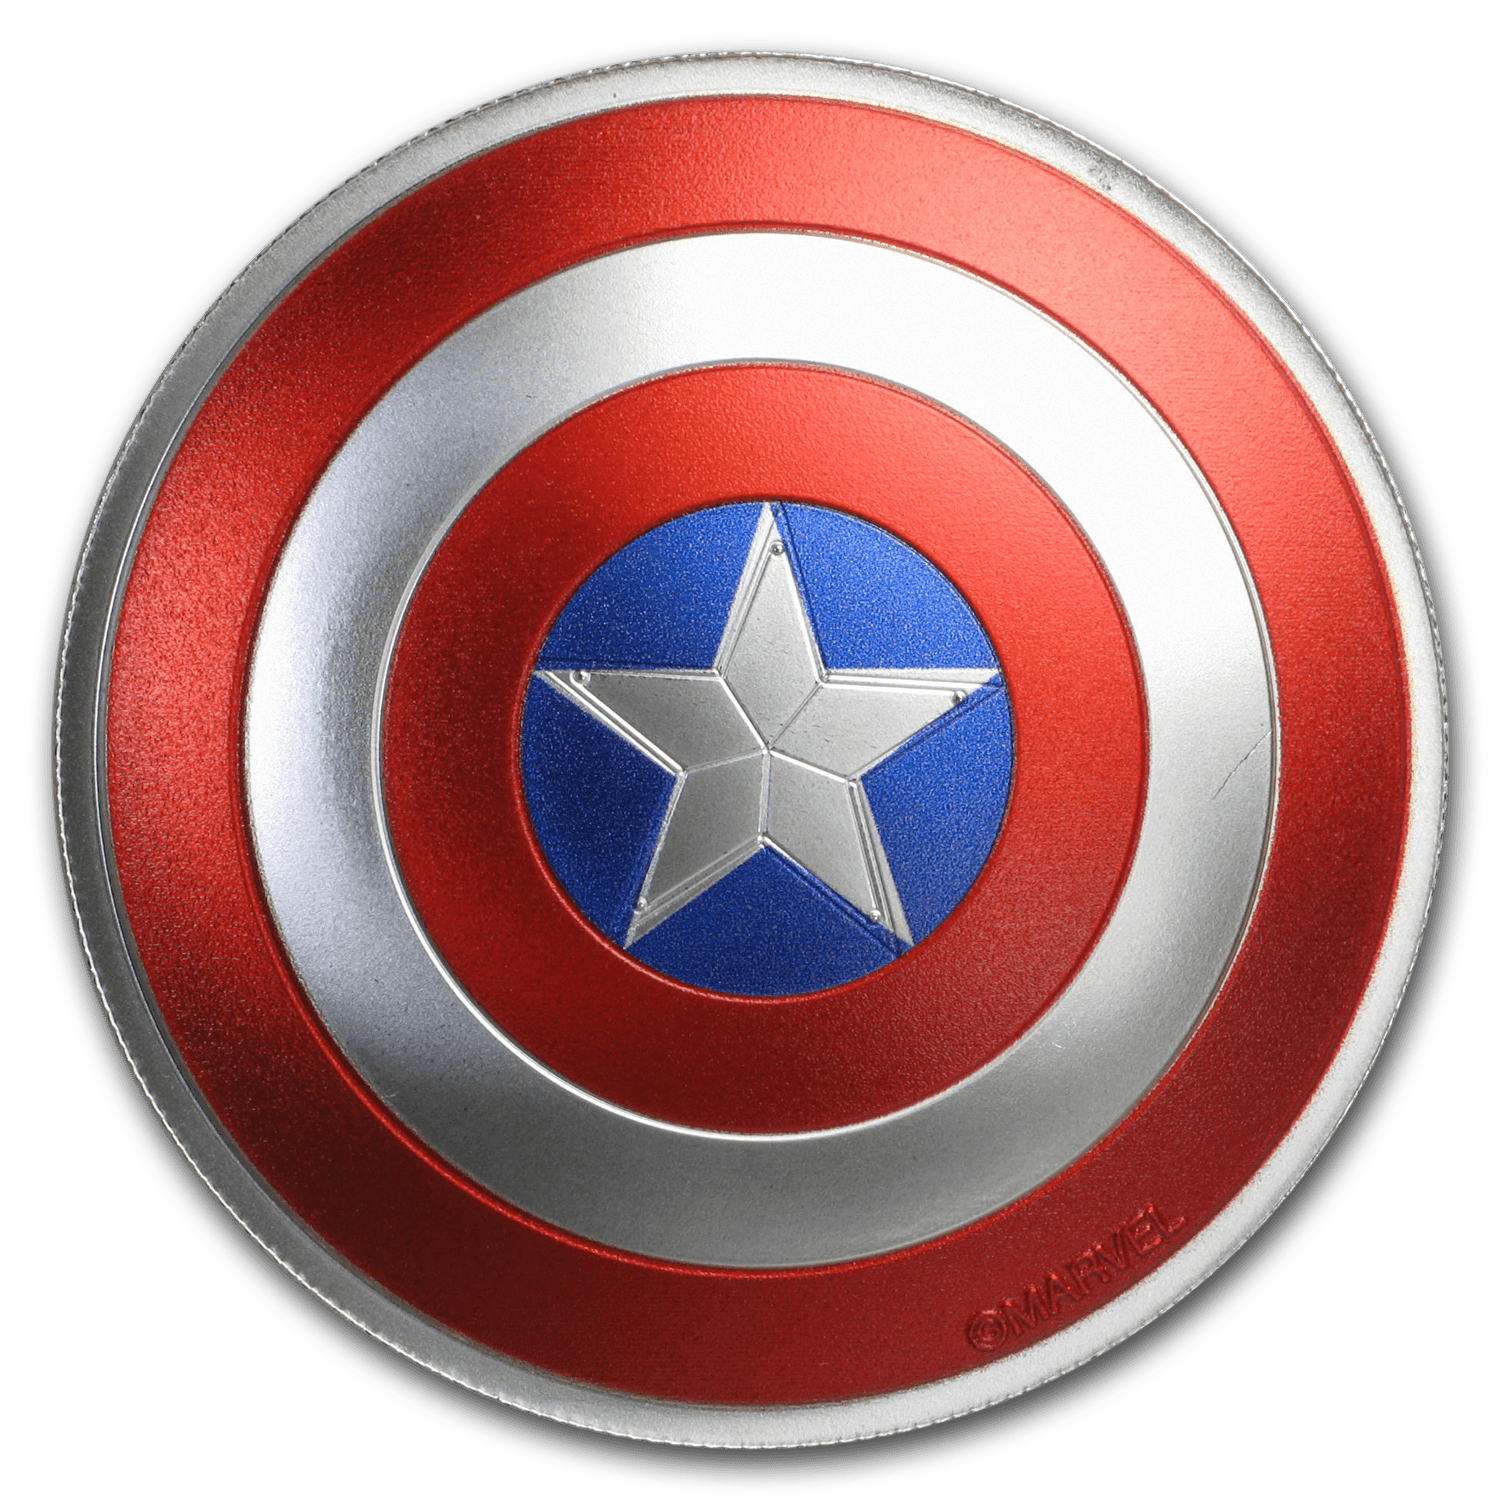 Captain America Halftone Shield Stainless Steel Water Bottle